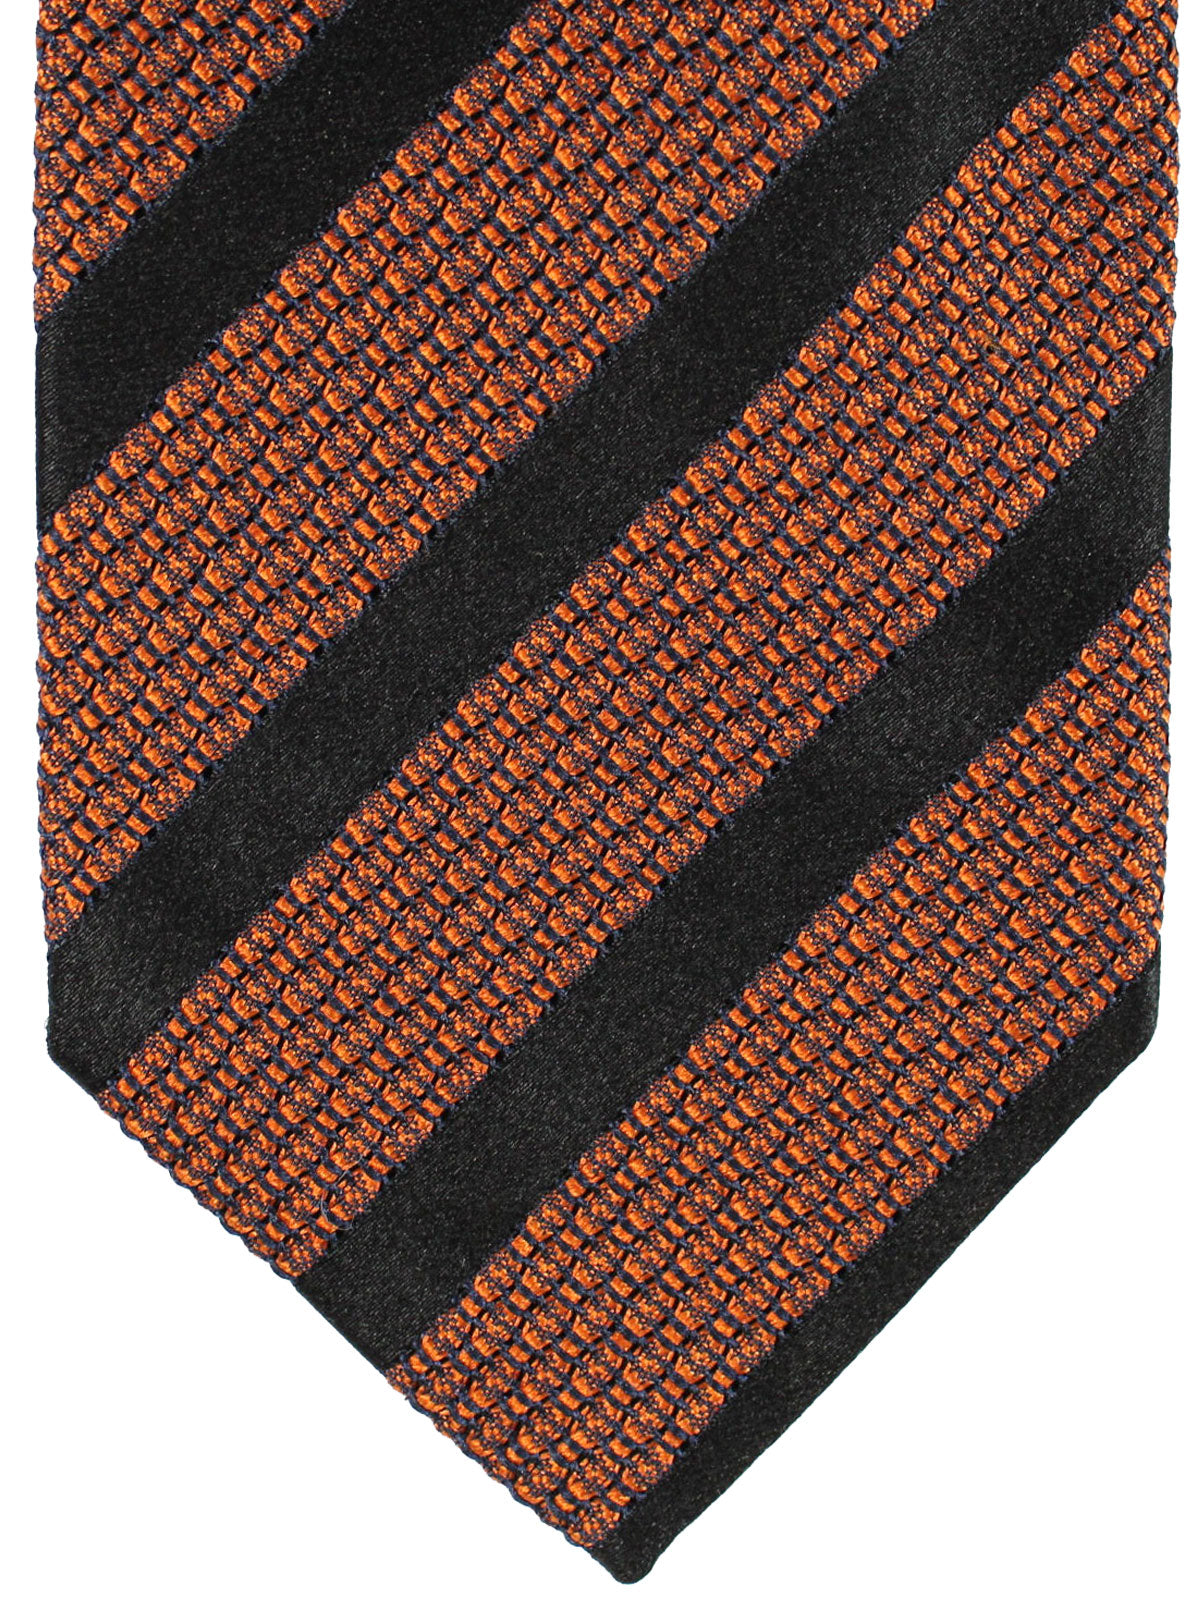 Tom Ford Tie Black Rust Brown Stripes - Tie Deals